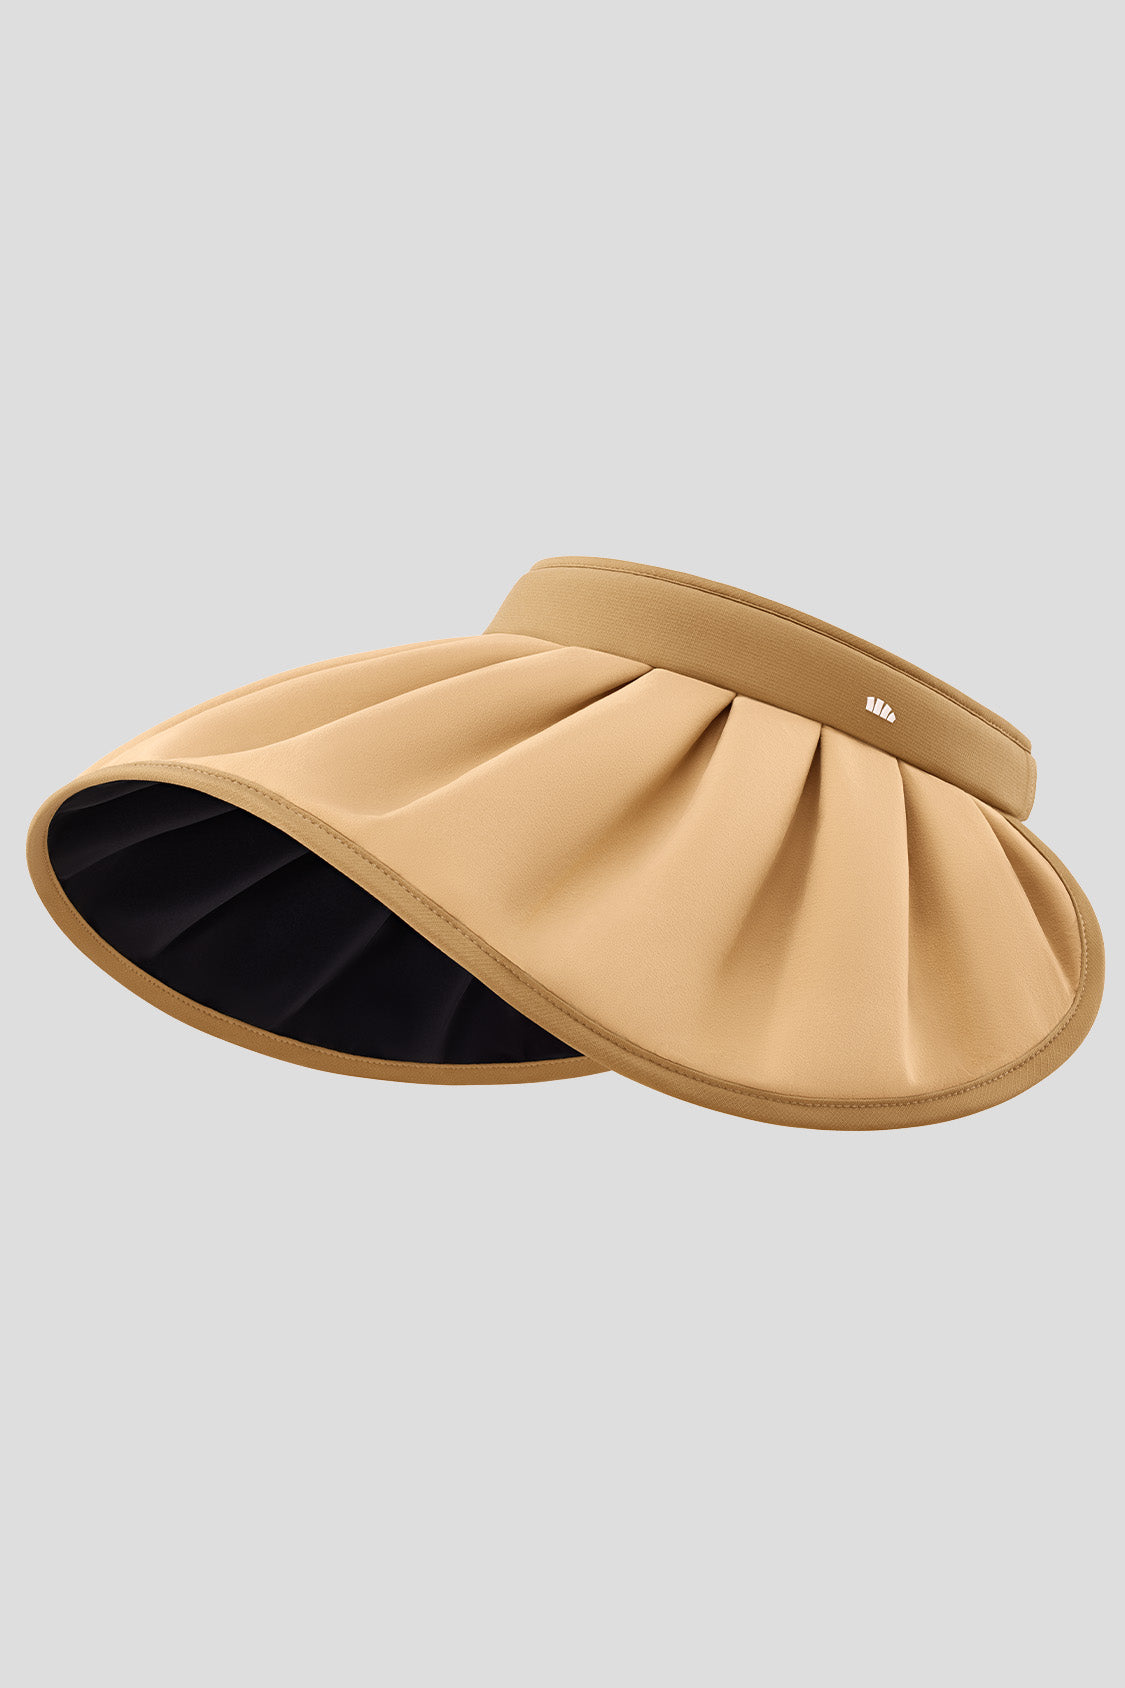 Beneunder Wide Brim UV Protection Packable Sun Shell Hats Oak Brown